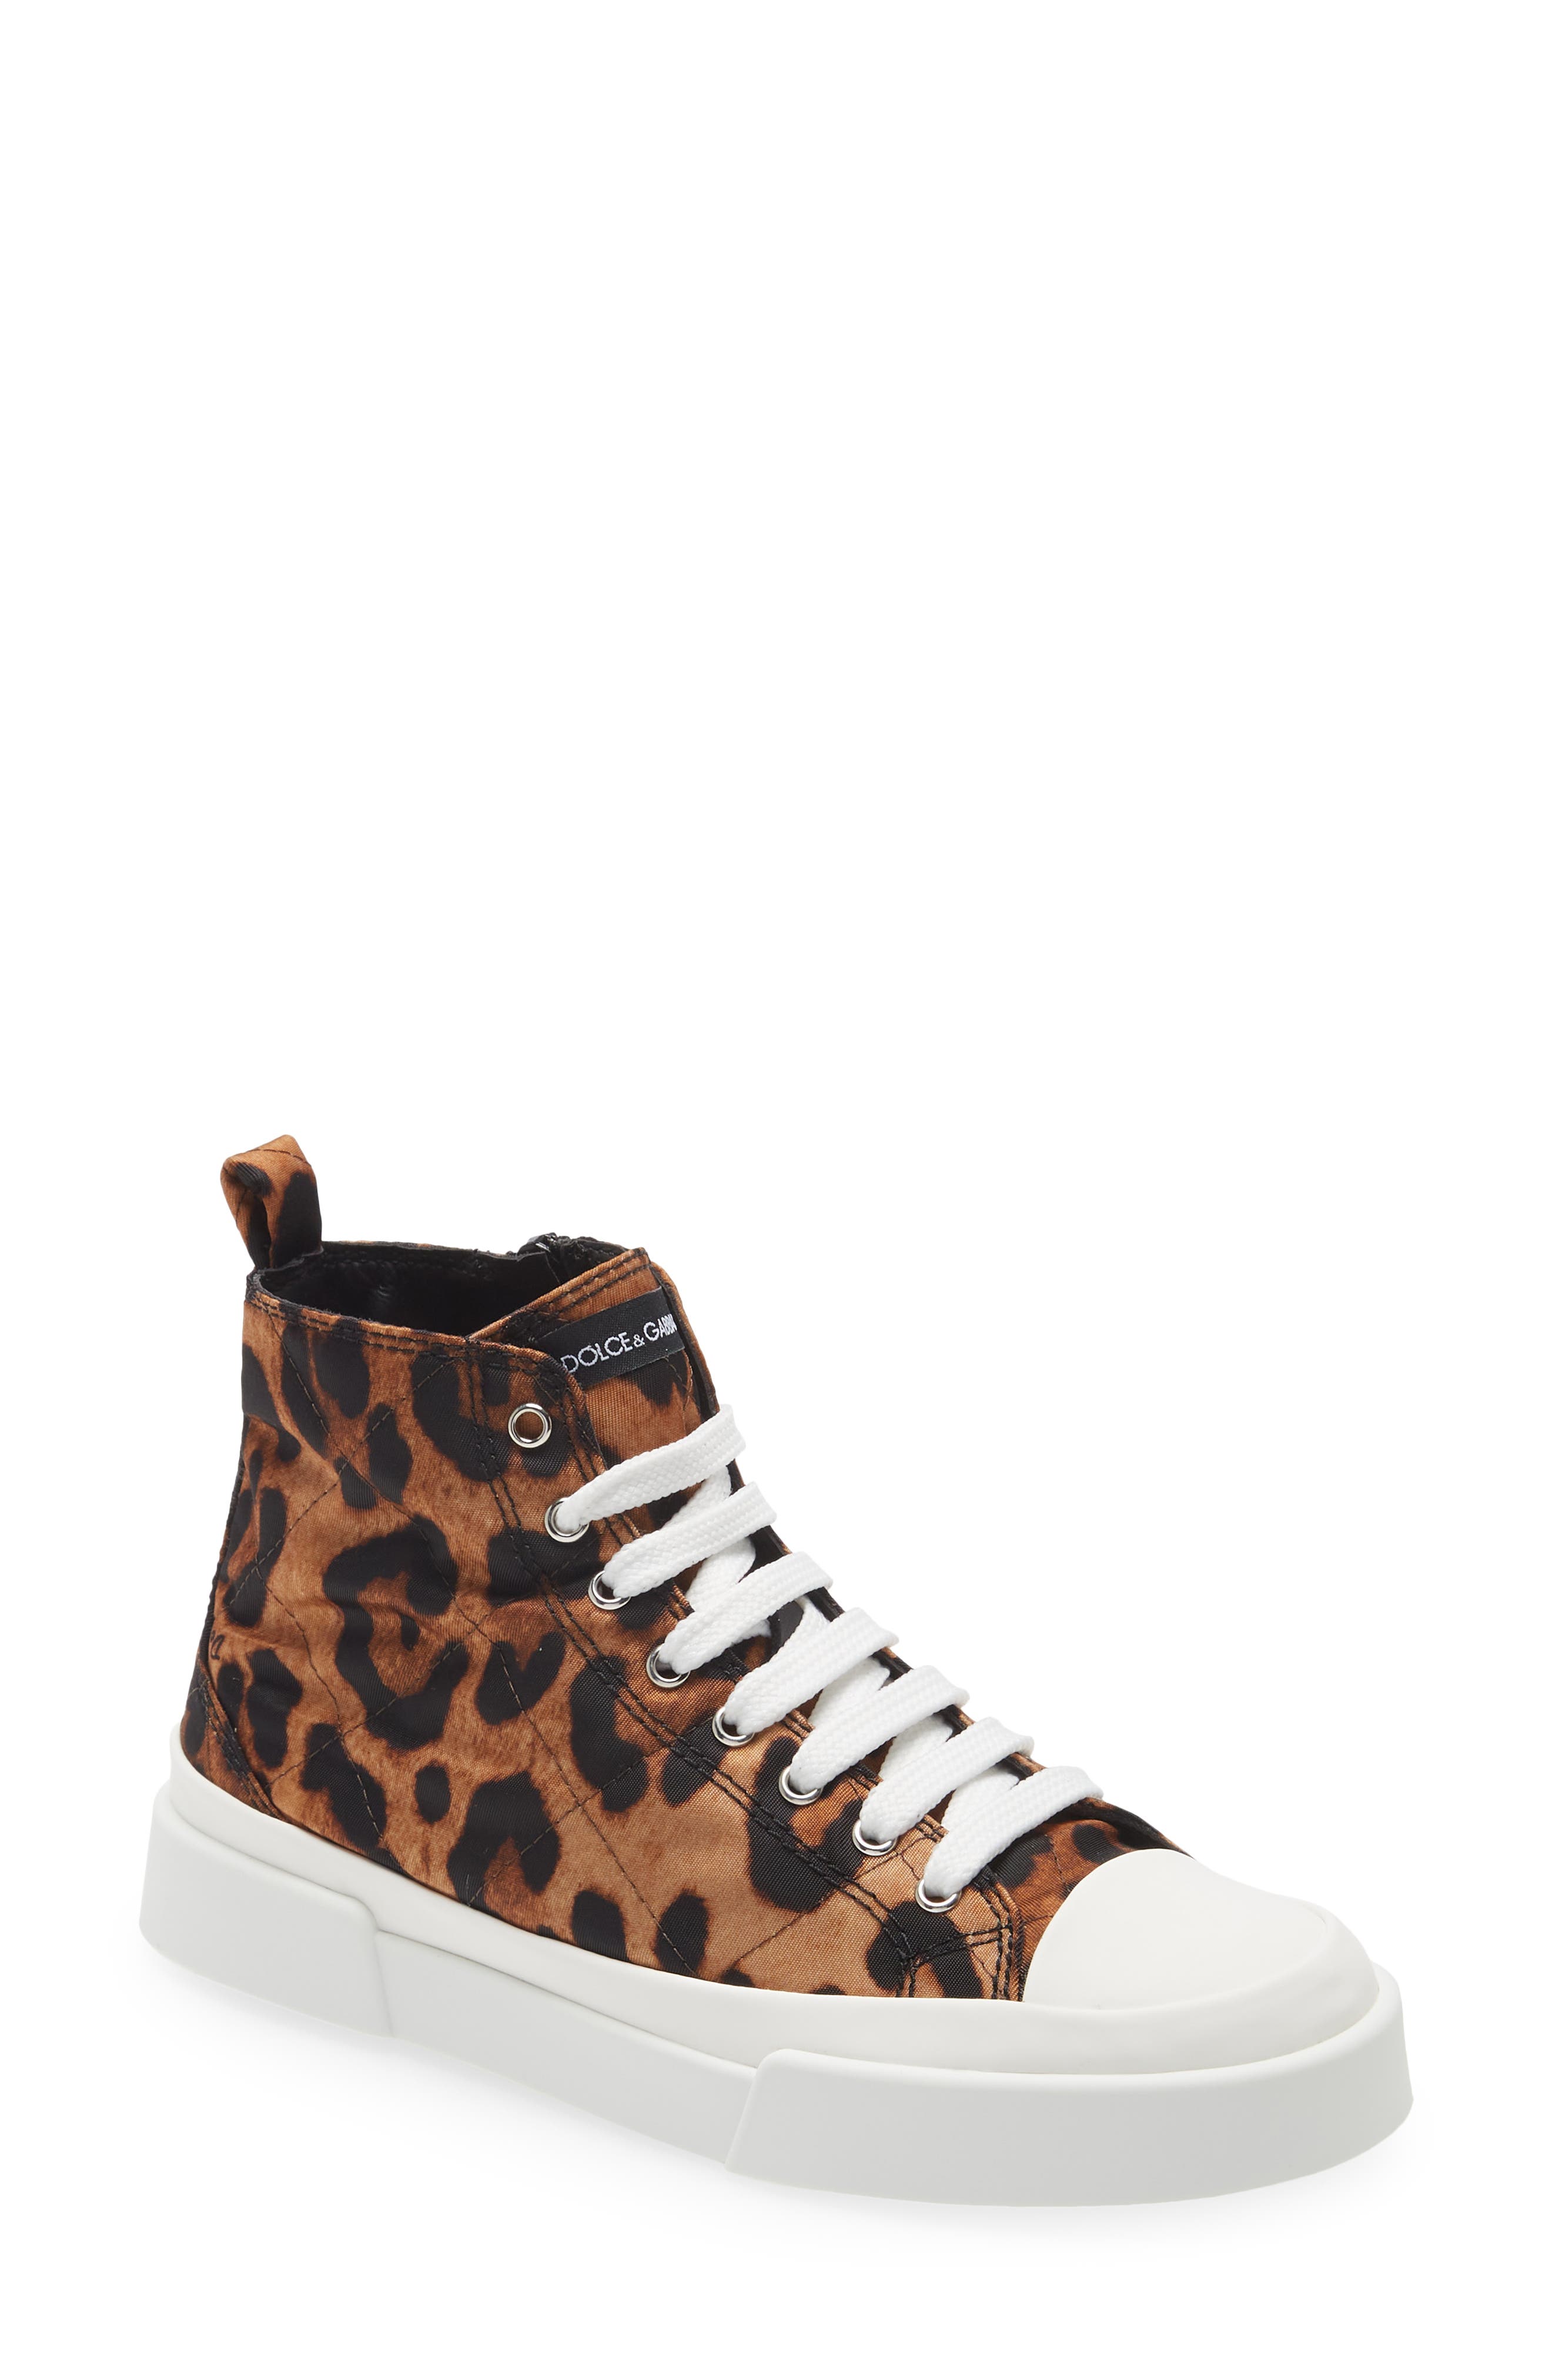 Dolce & Gabbana Portofino Leopard Print High Top Sneaker at Nordstrom, Size 2Us